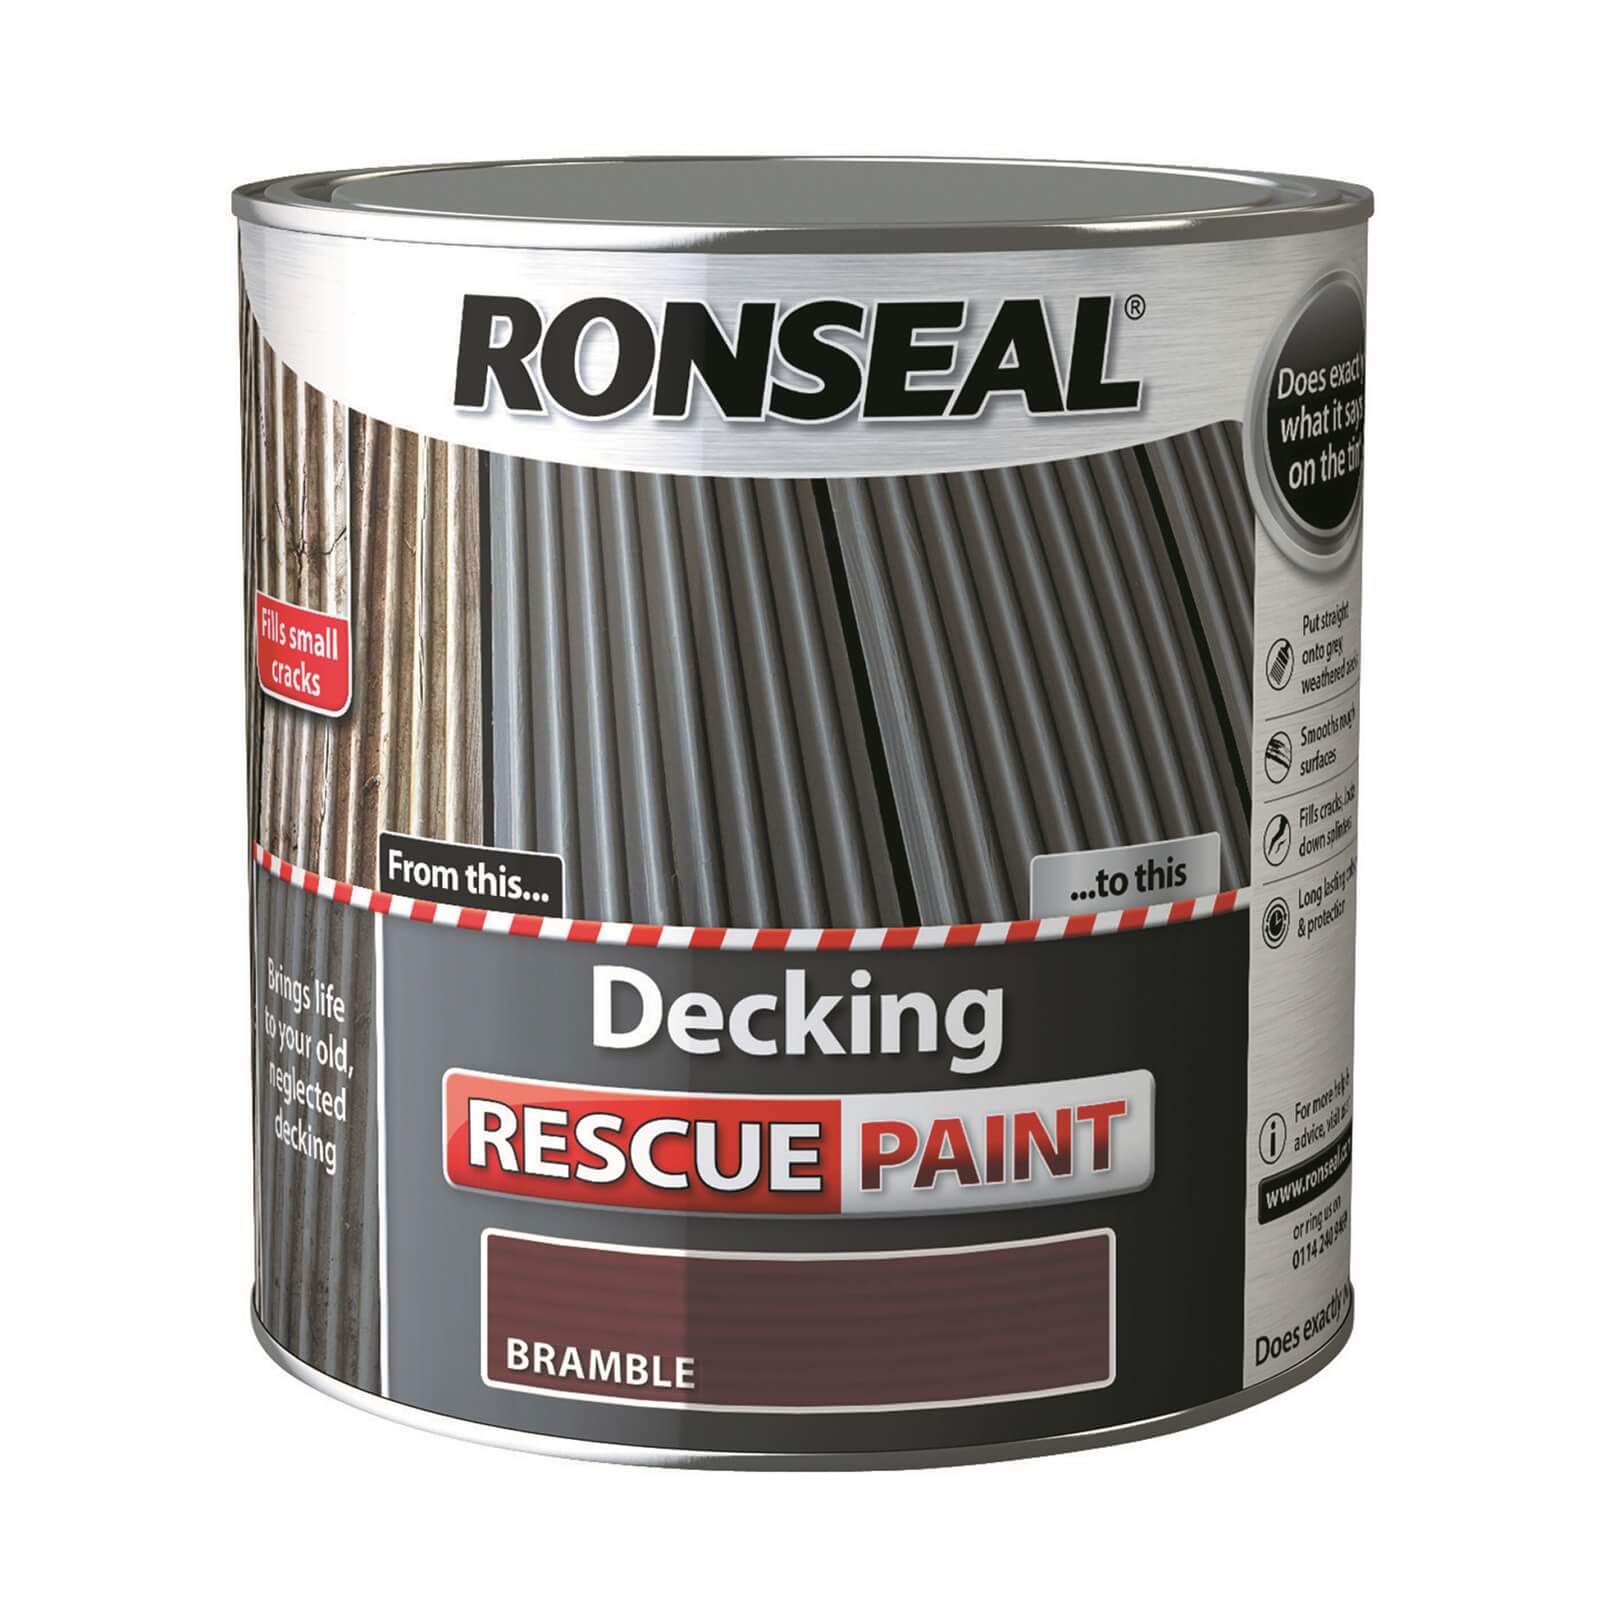 Ronseal Decking Rescue Paint Bramble - 2.5L